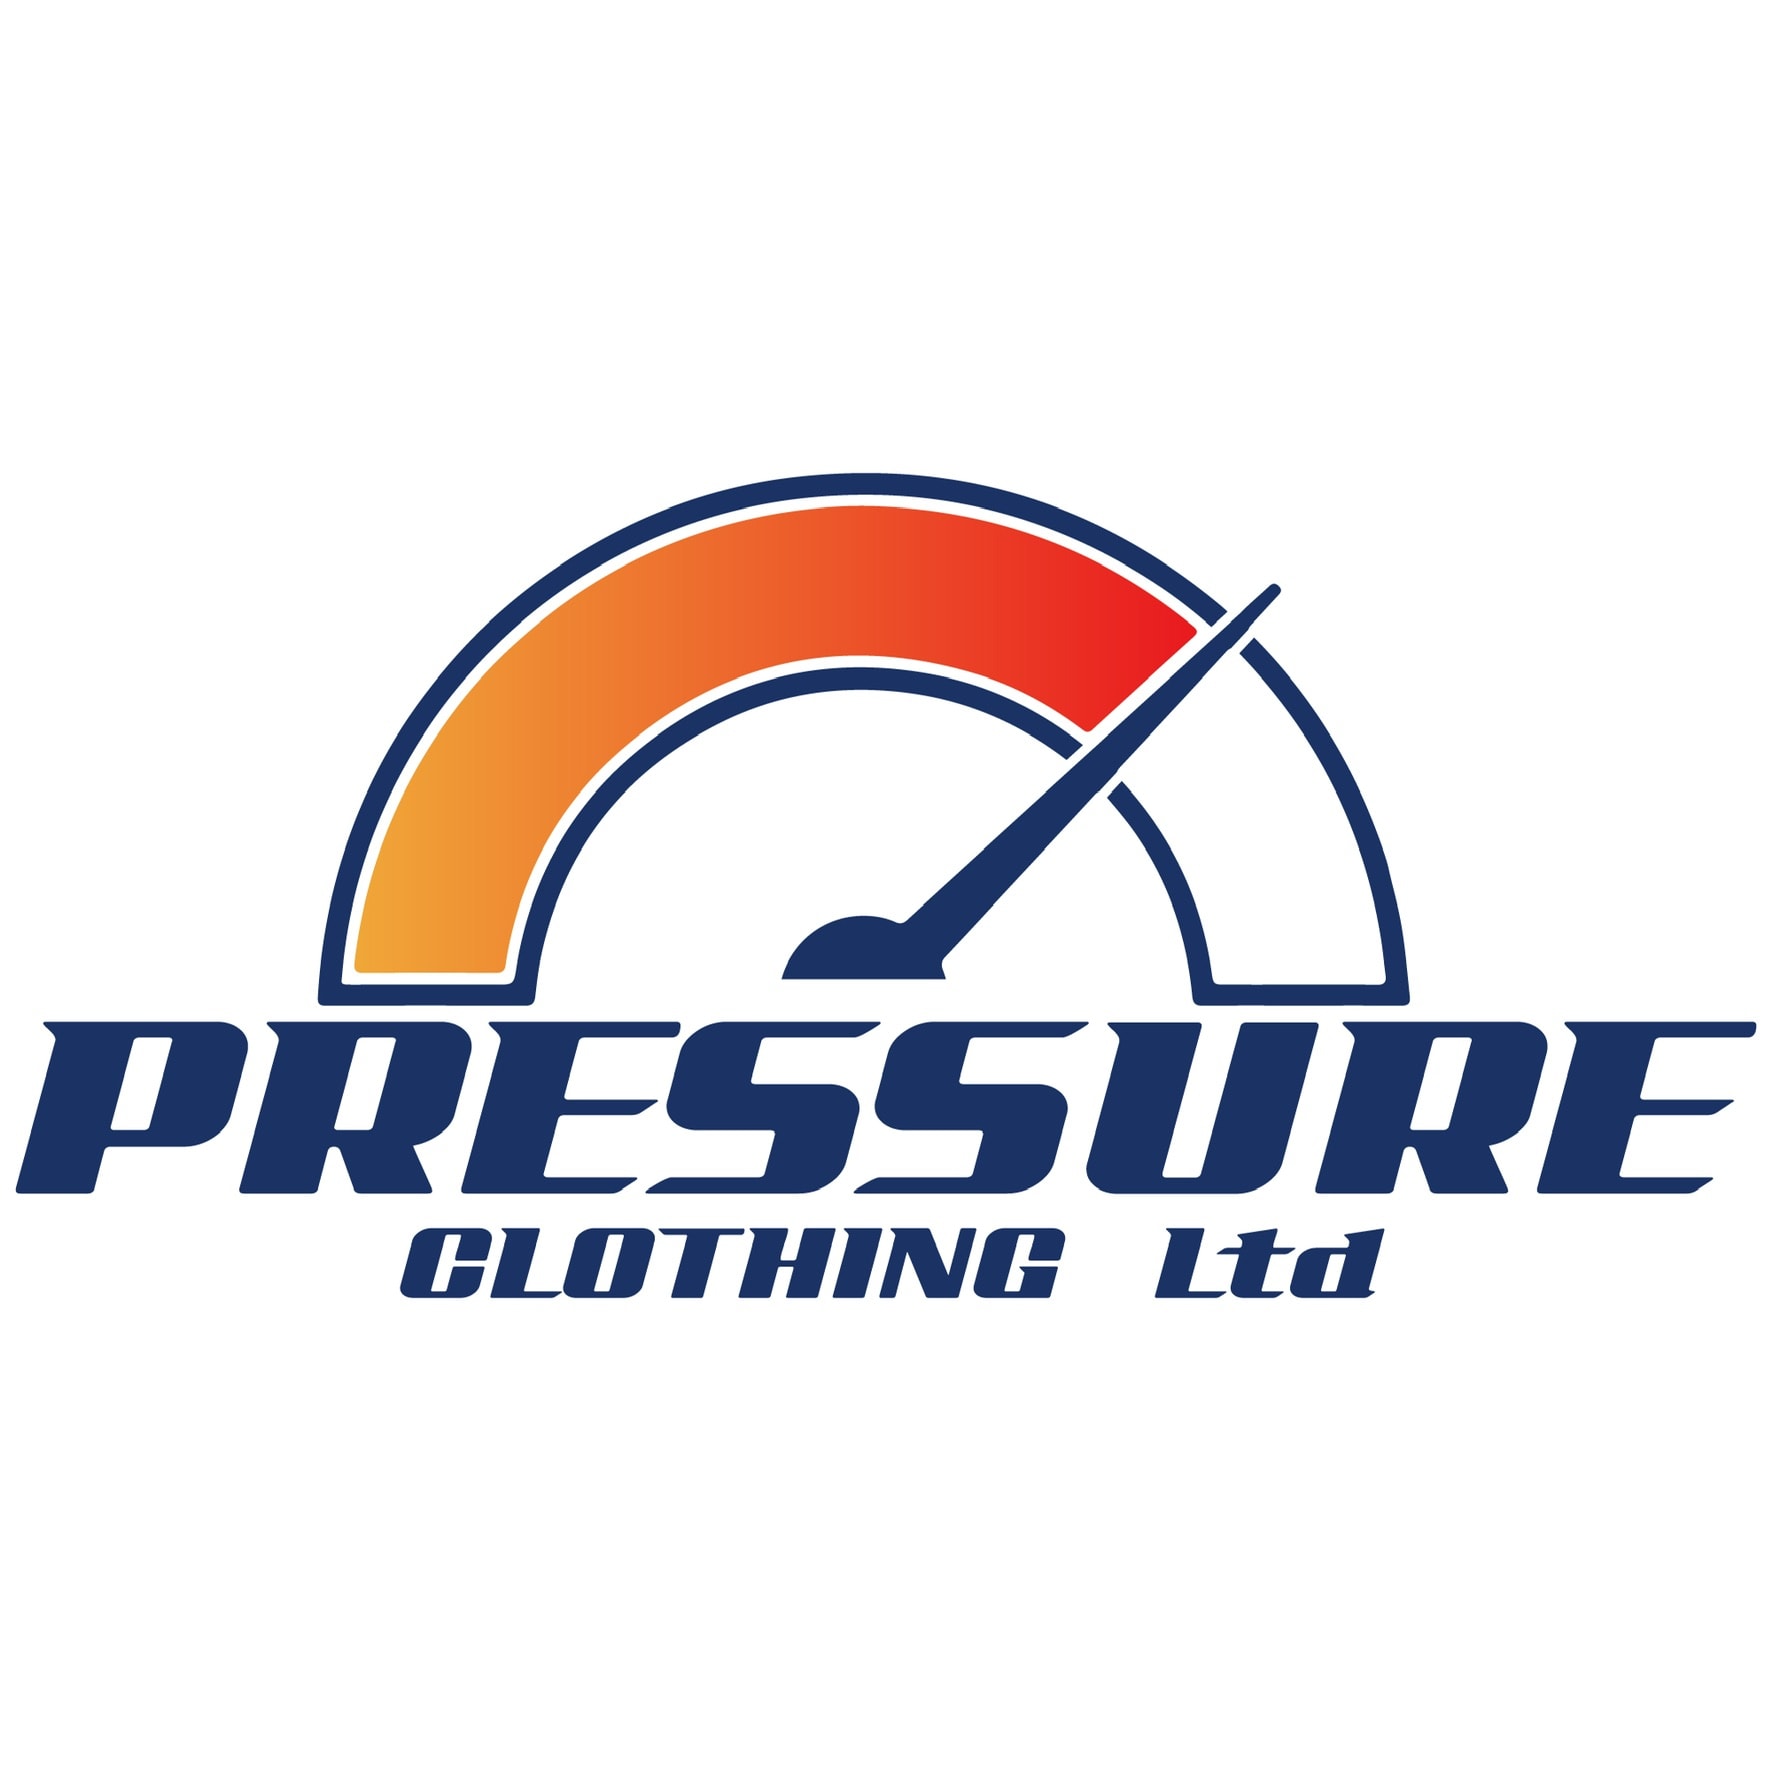 Pressure Clothing